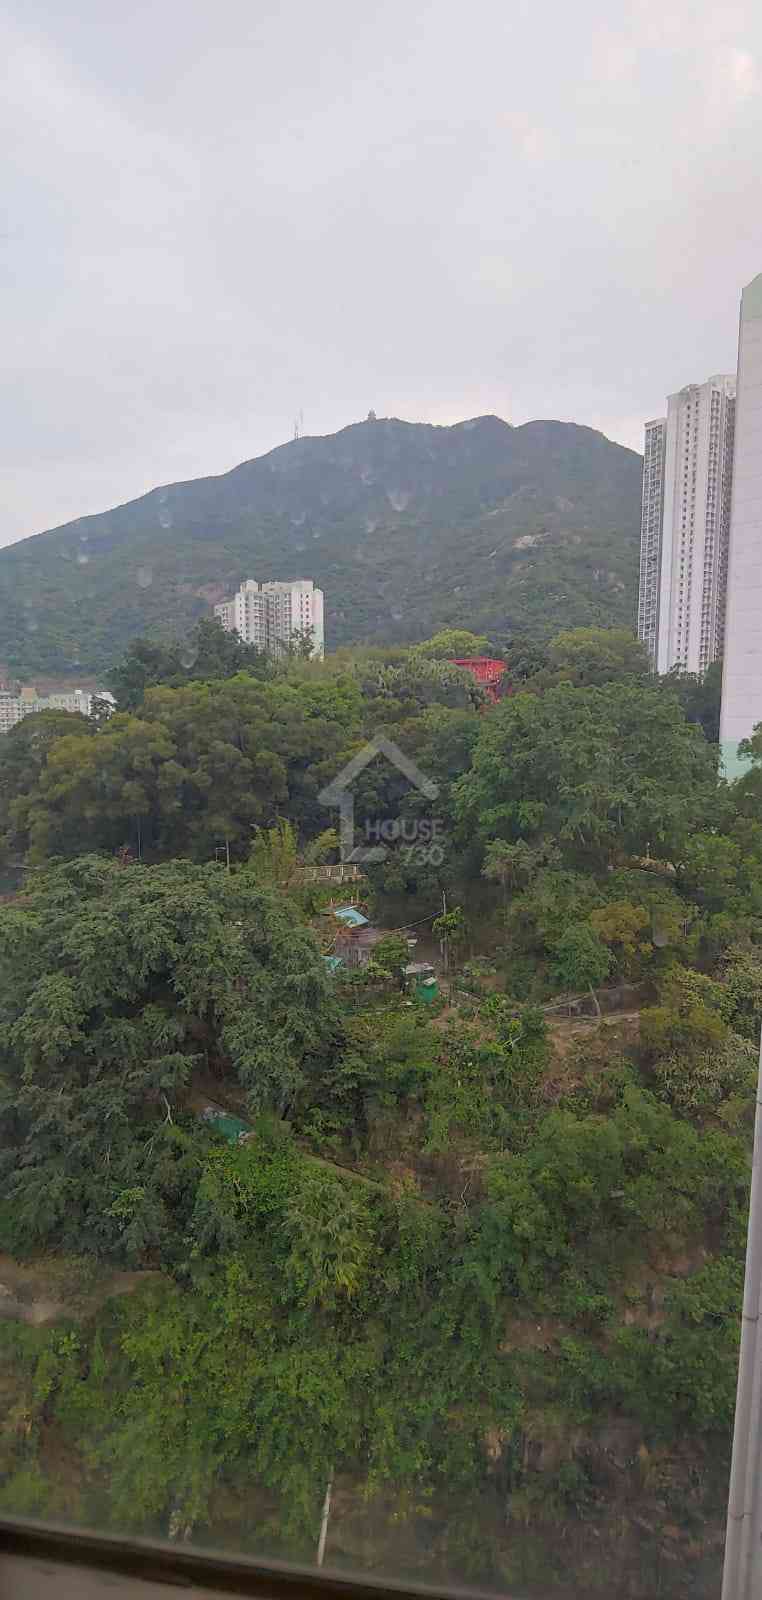 Sai Wan Ho BELLEVUE (BELLEVE) COURT Upper Floor View from Living Room House730-6012270